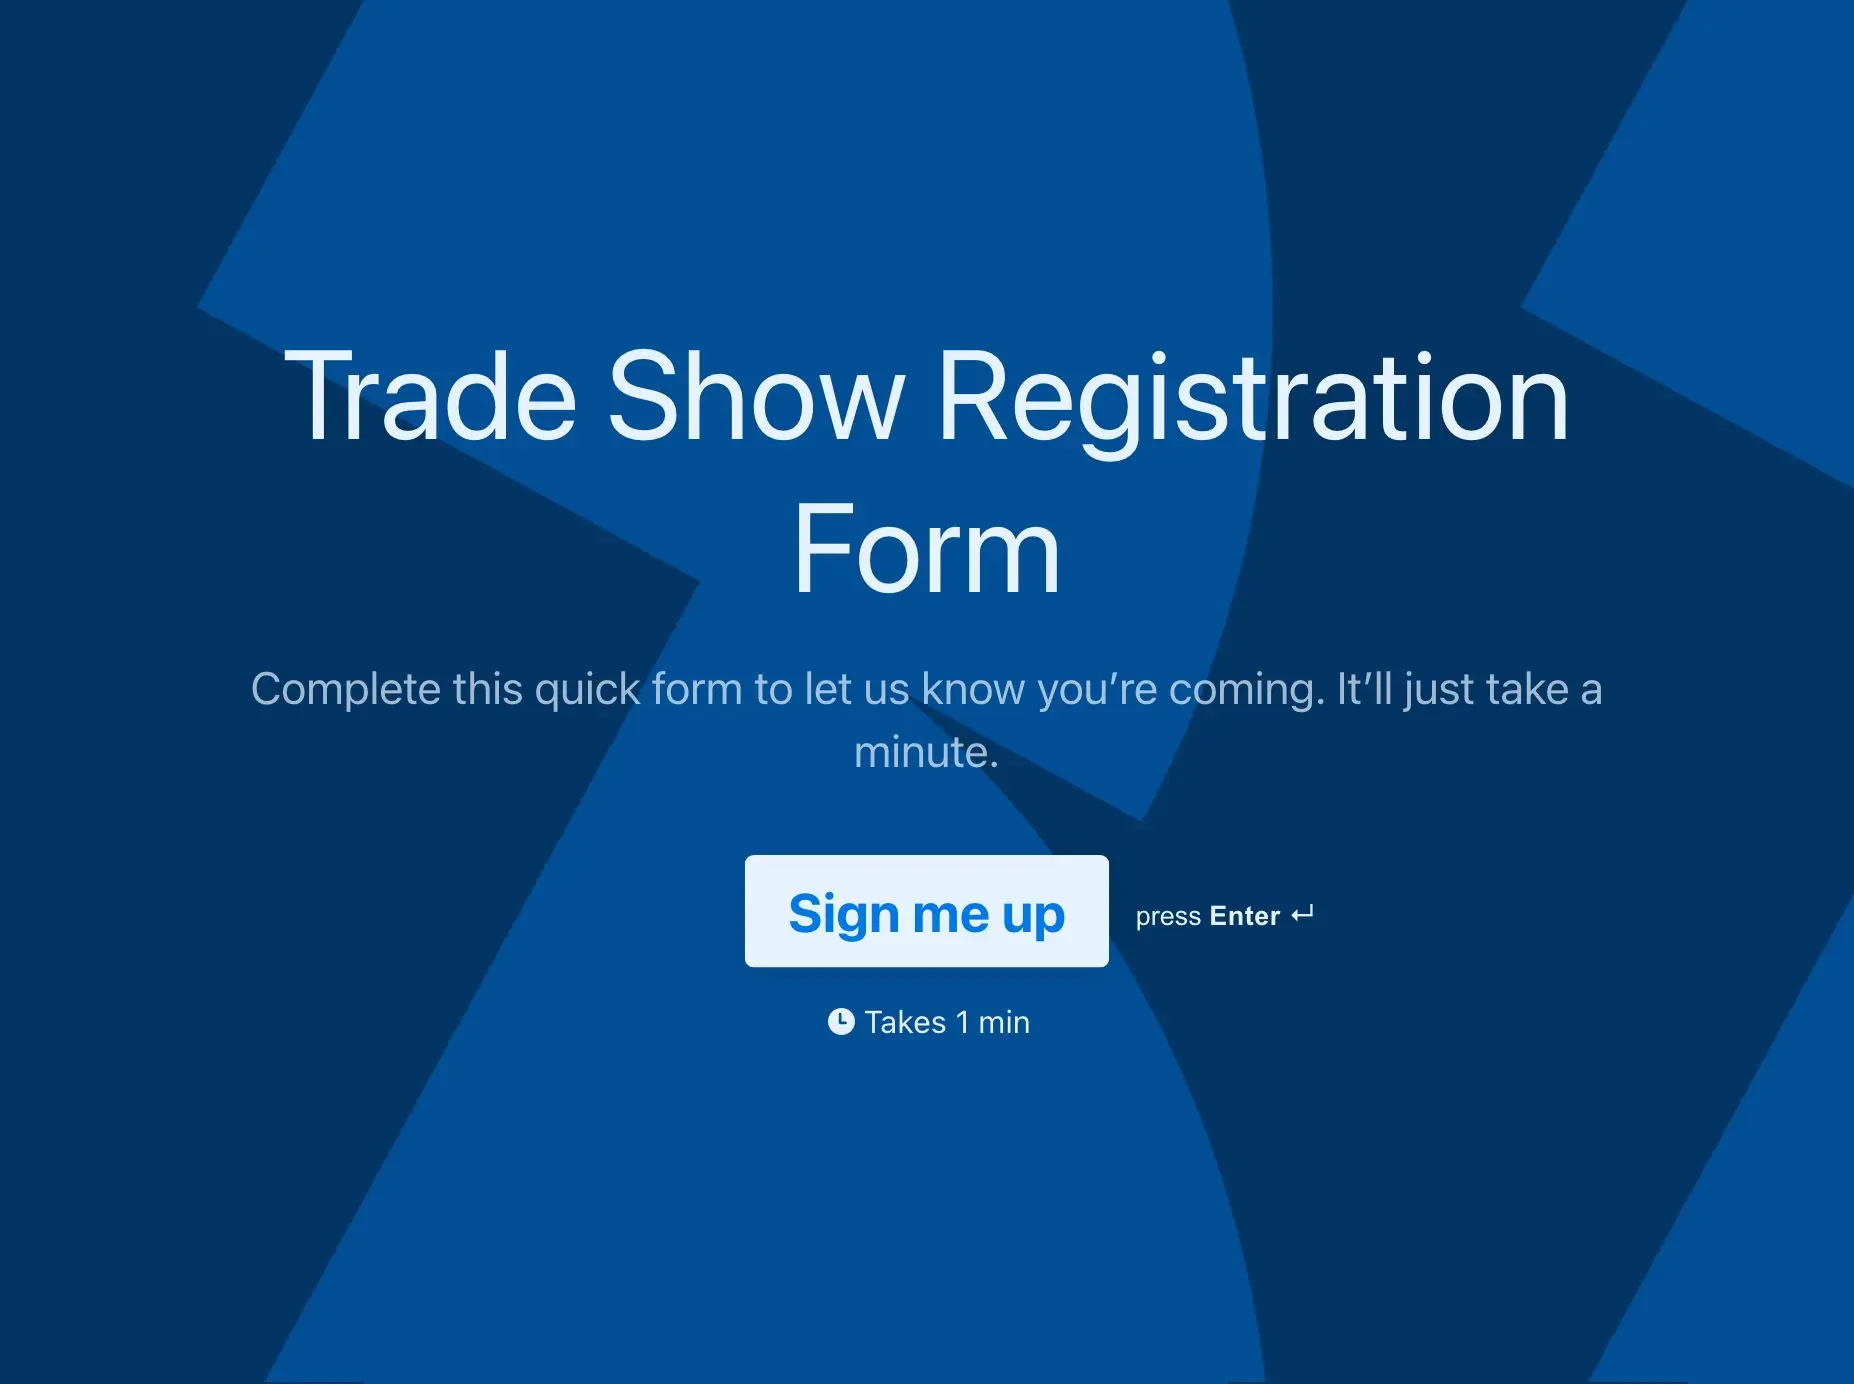 Trade Show Registration Form Template Hero